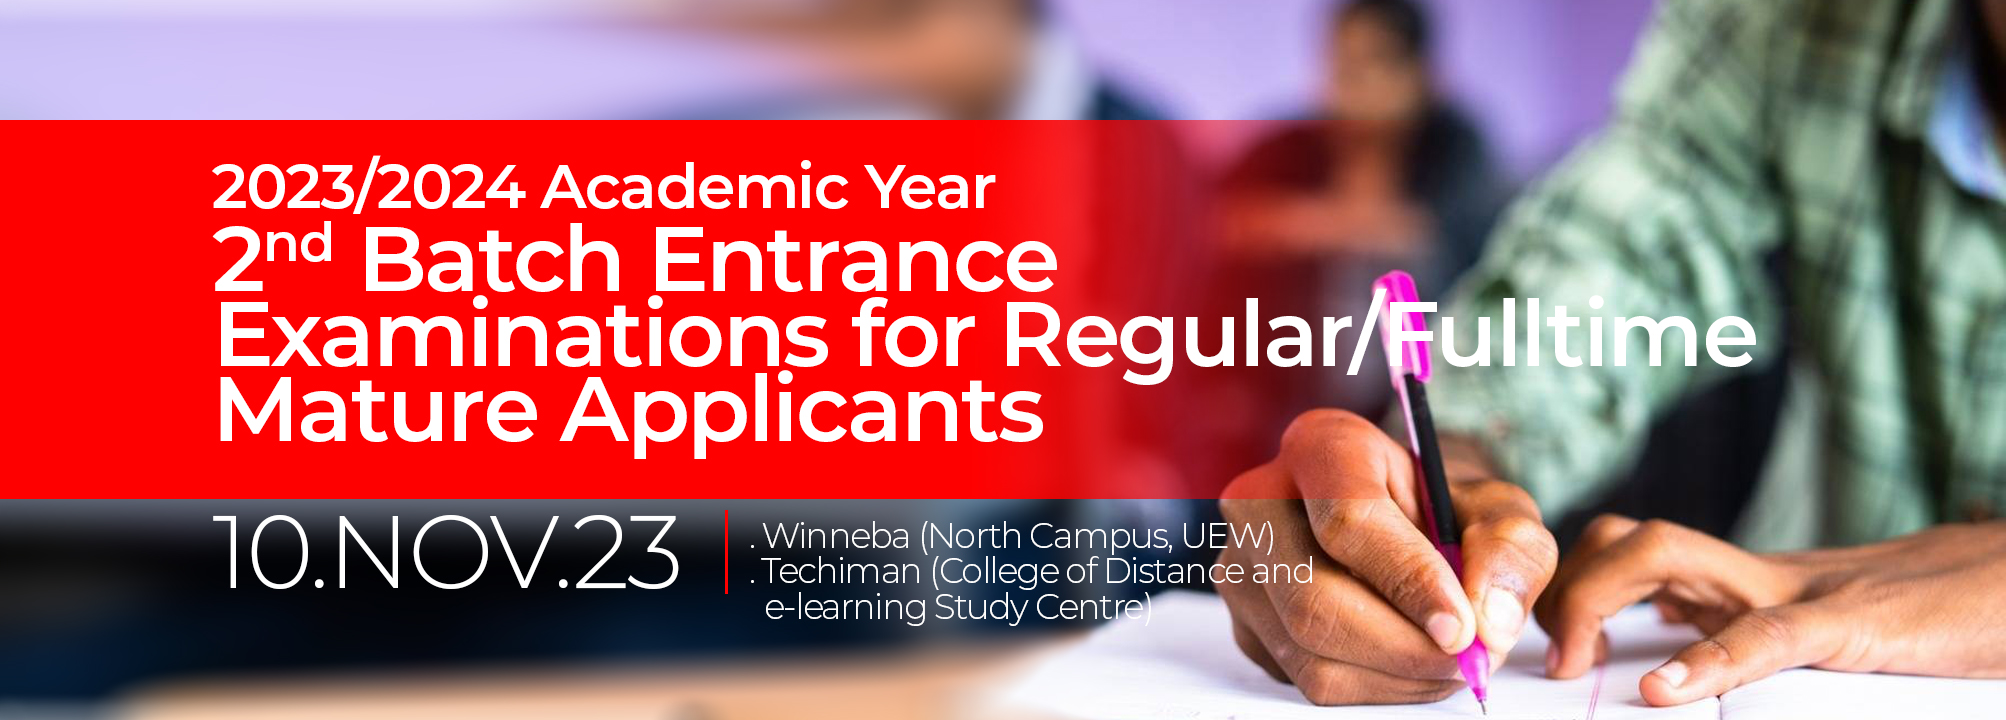 UEW 2nd Batch Entrance Examinations for Regular/Fulltime Mature Applicants 2023/2024